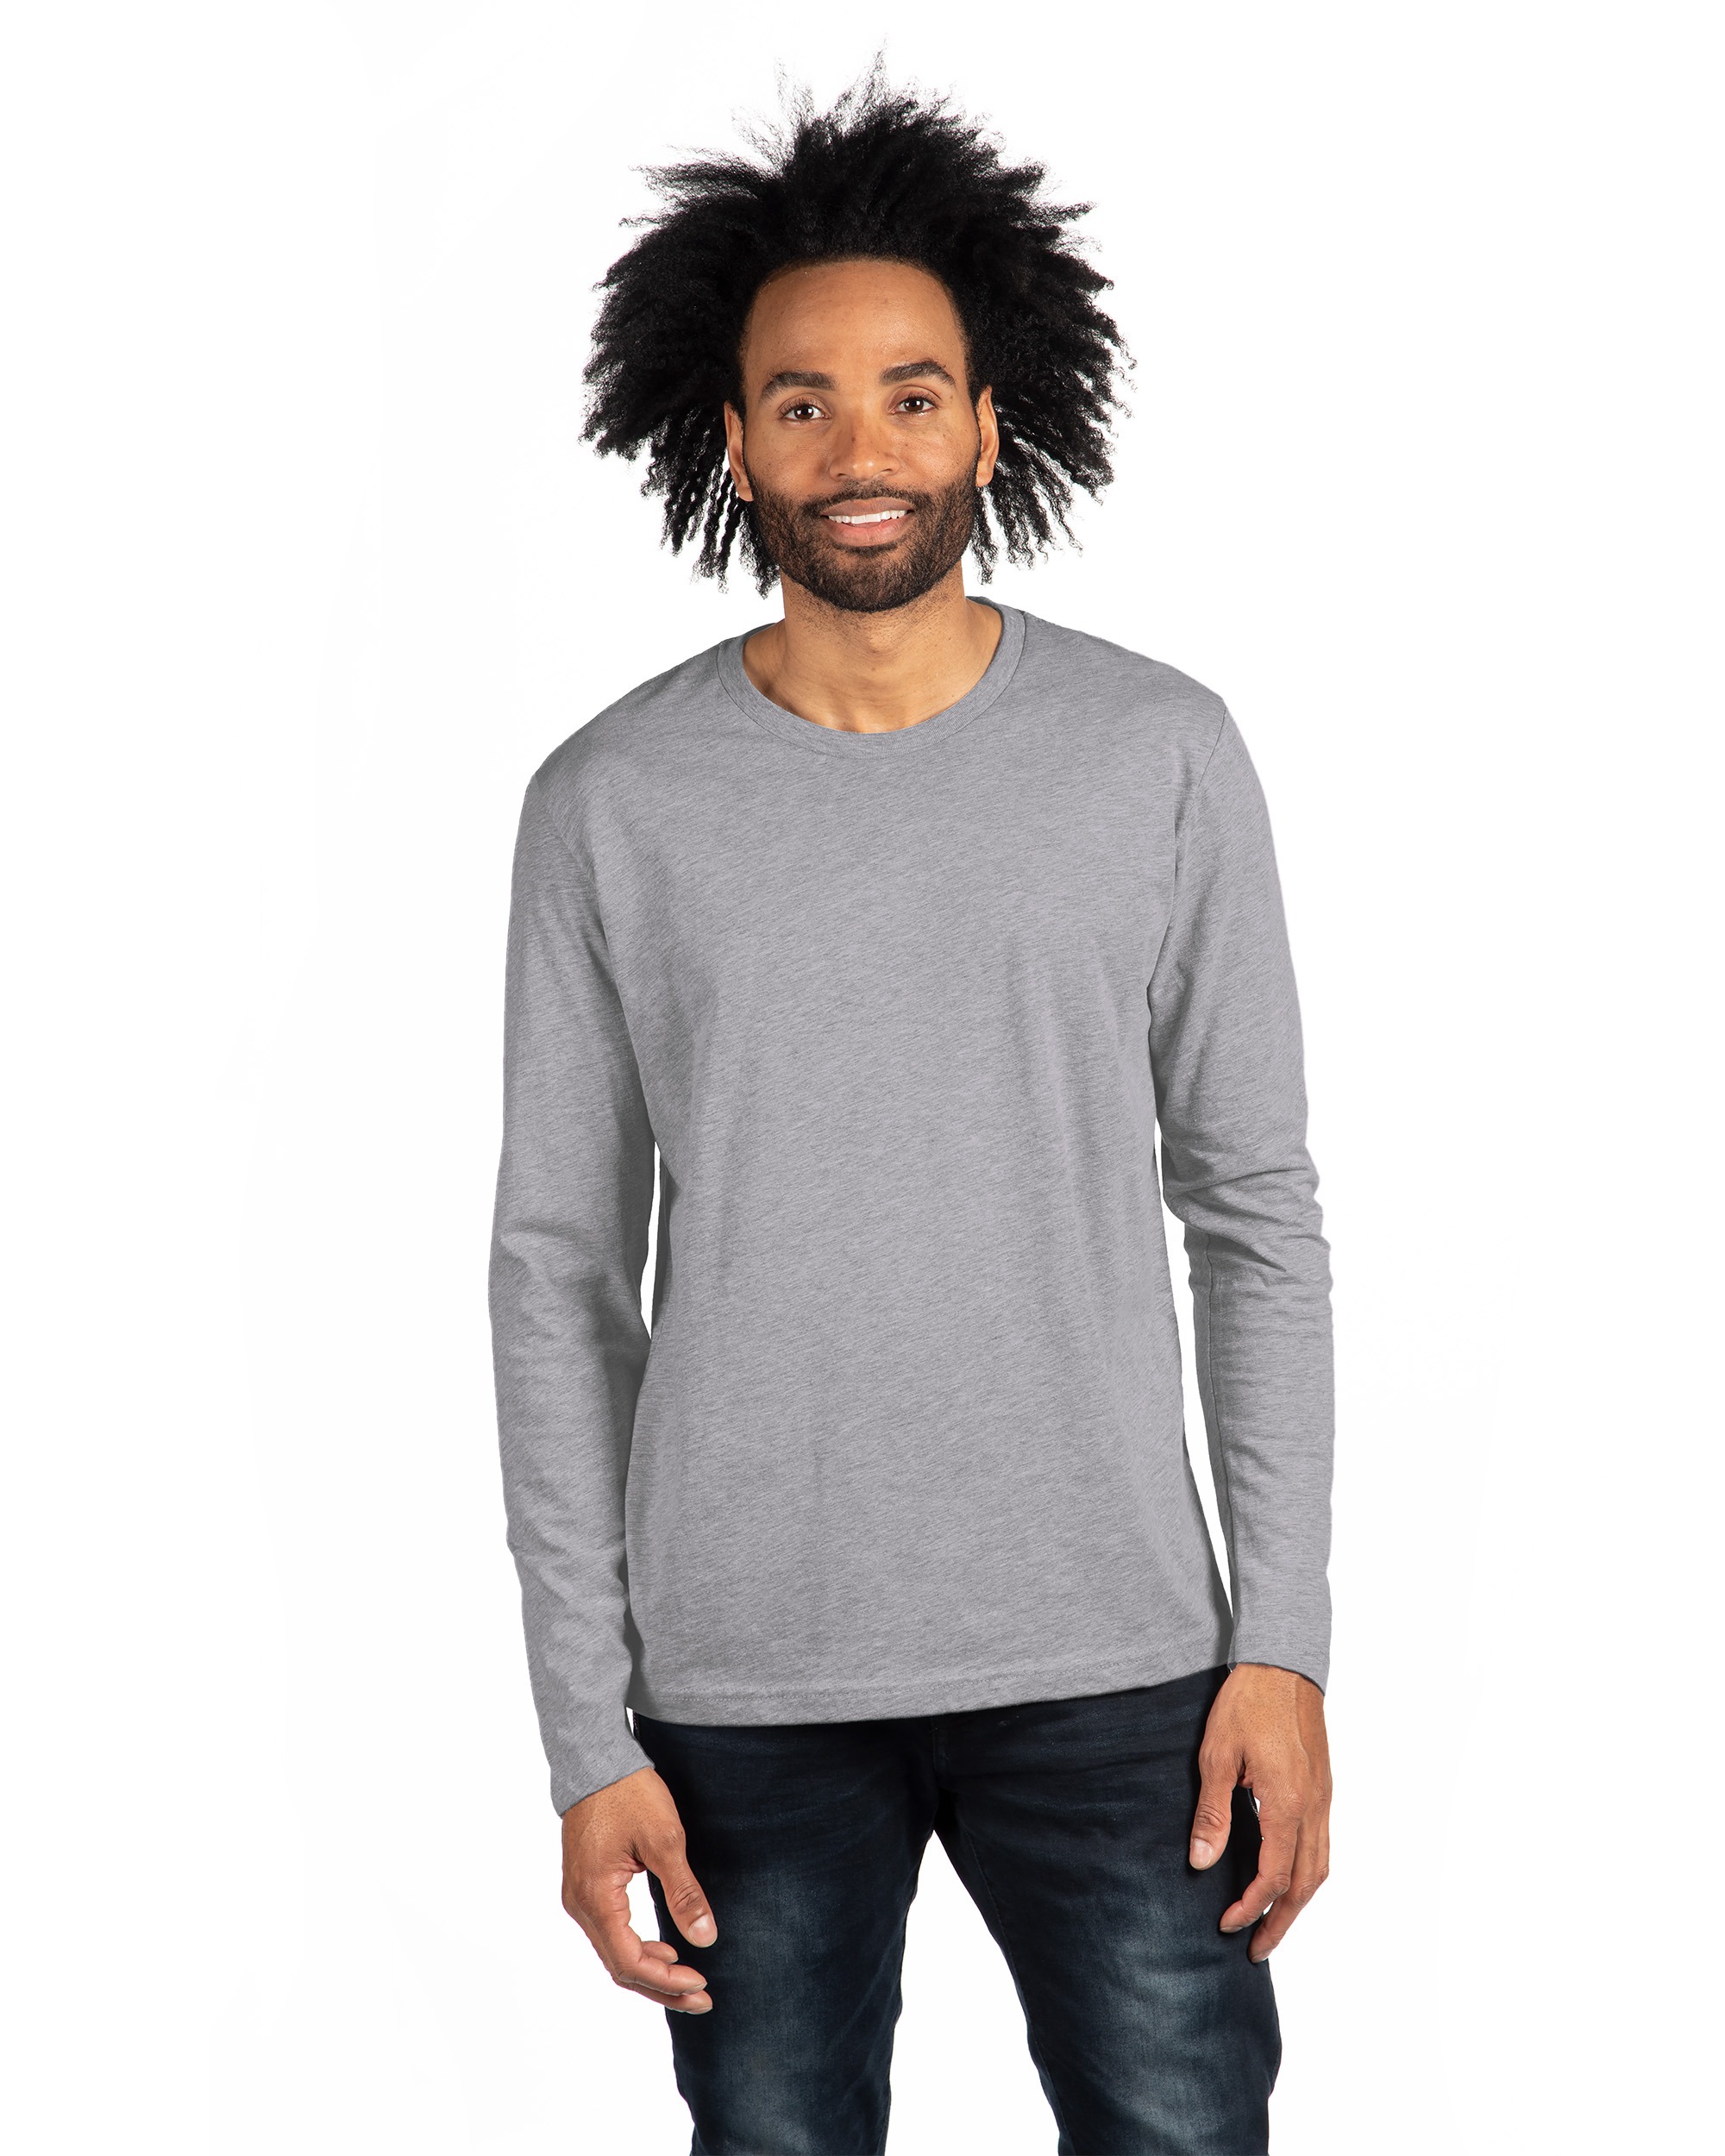 Next Level Apparel® 3601 Unisex Cotton Long Sleeve T-Shirt